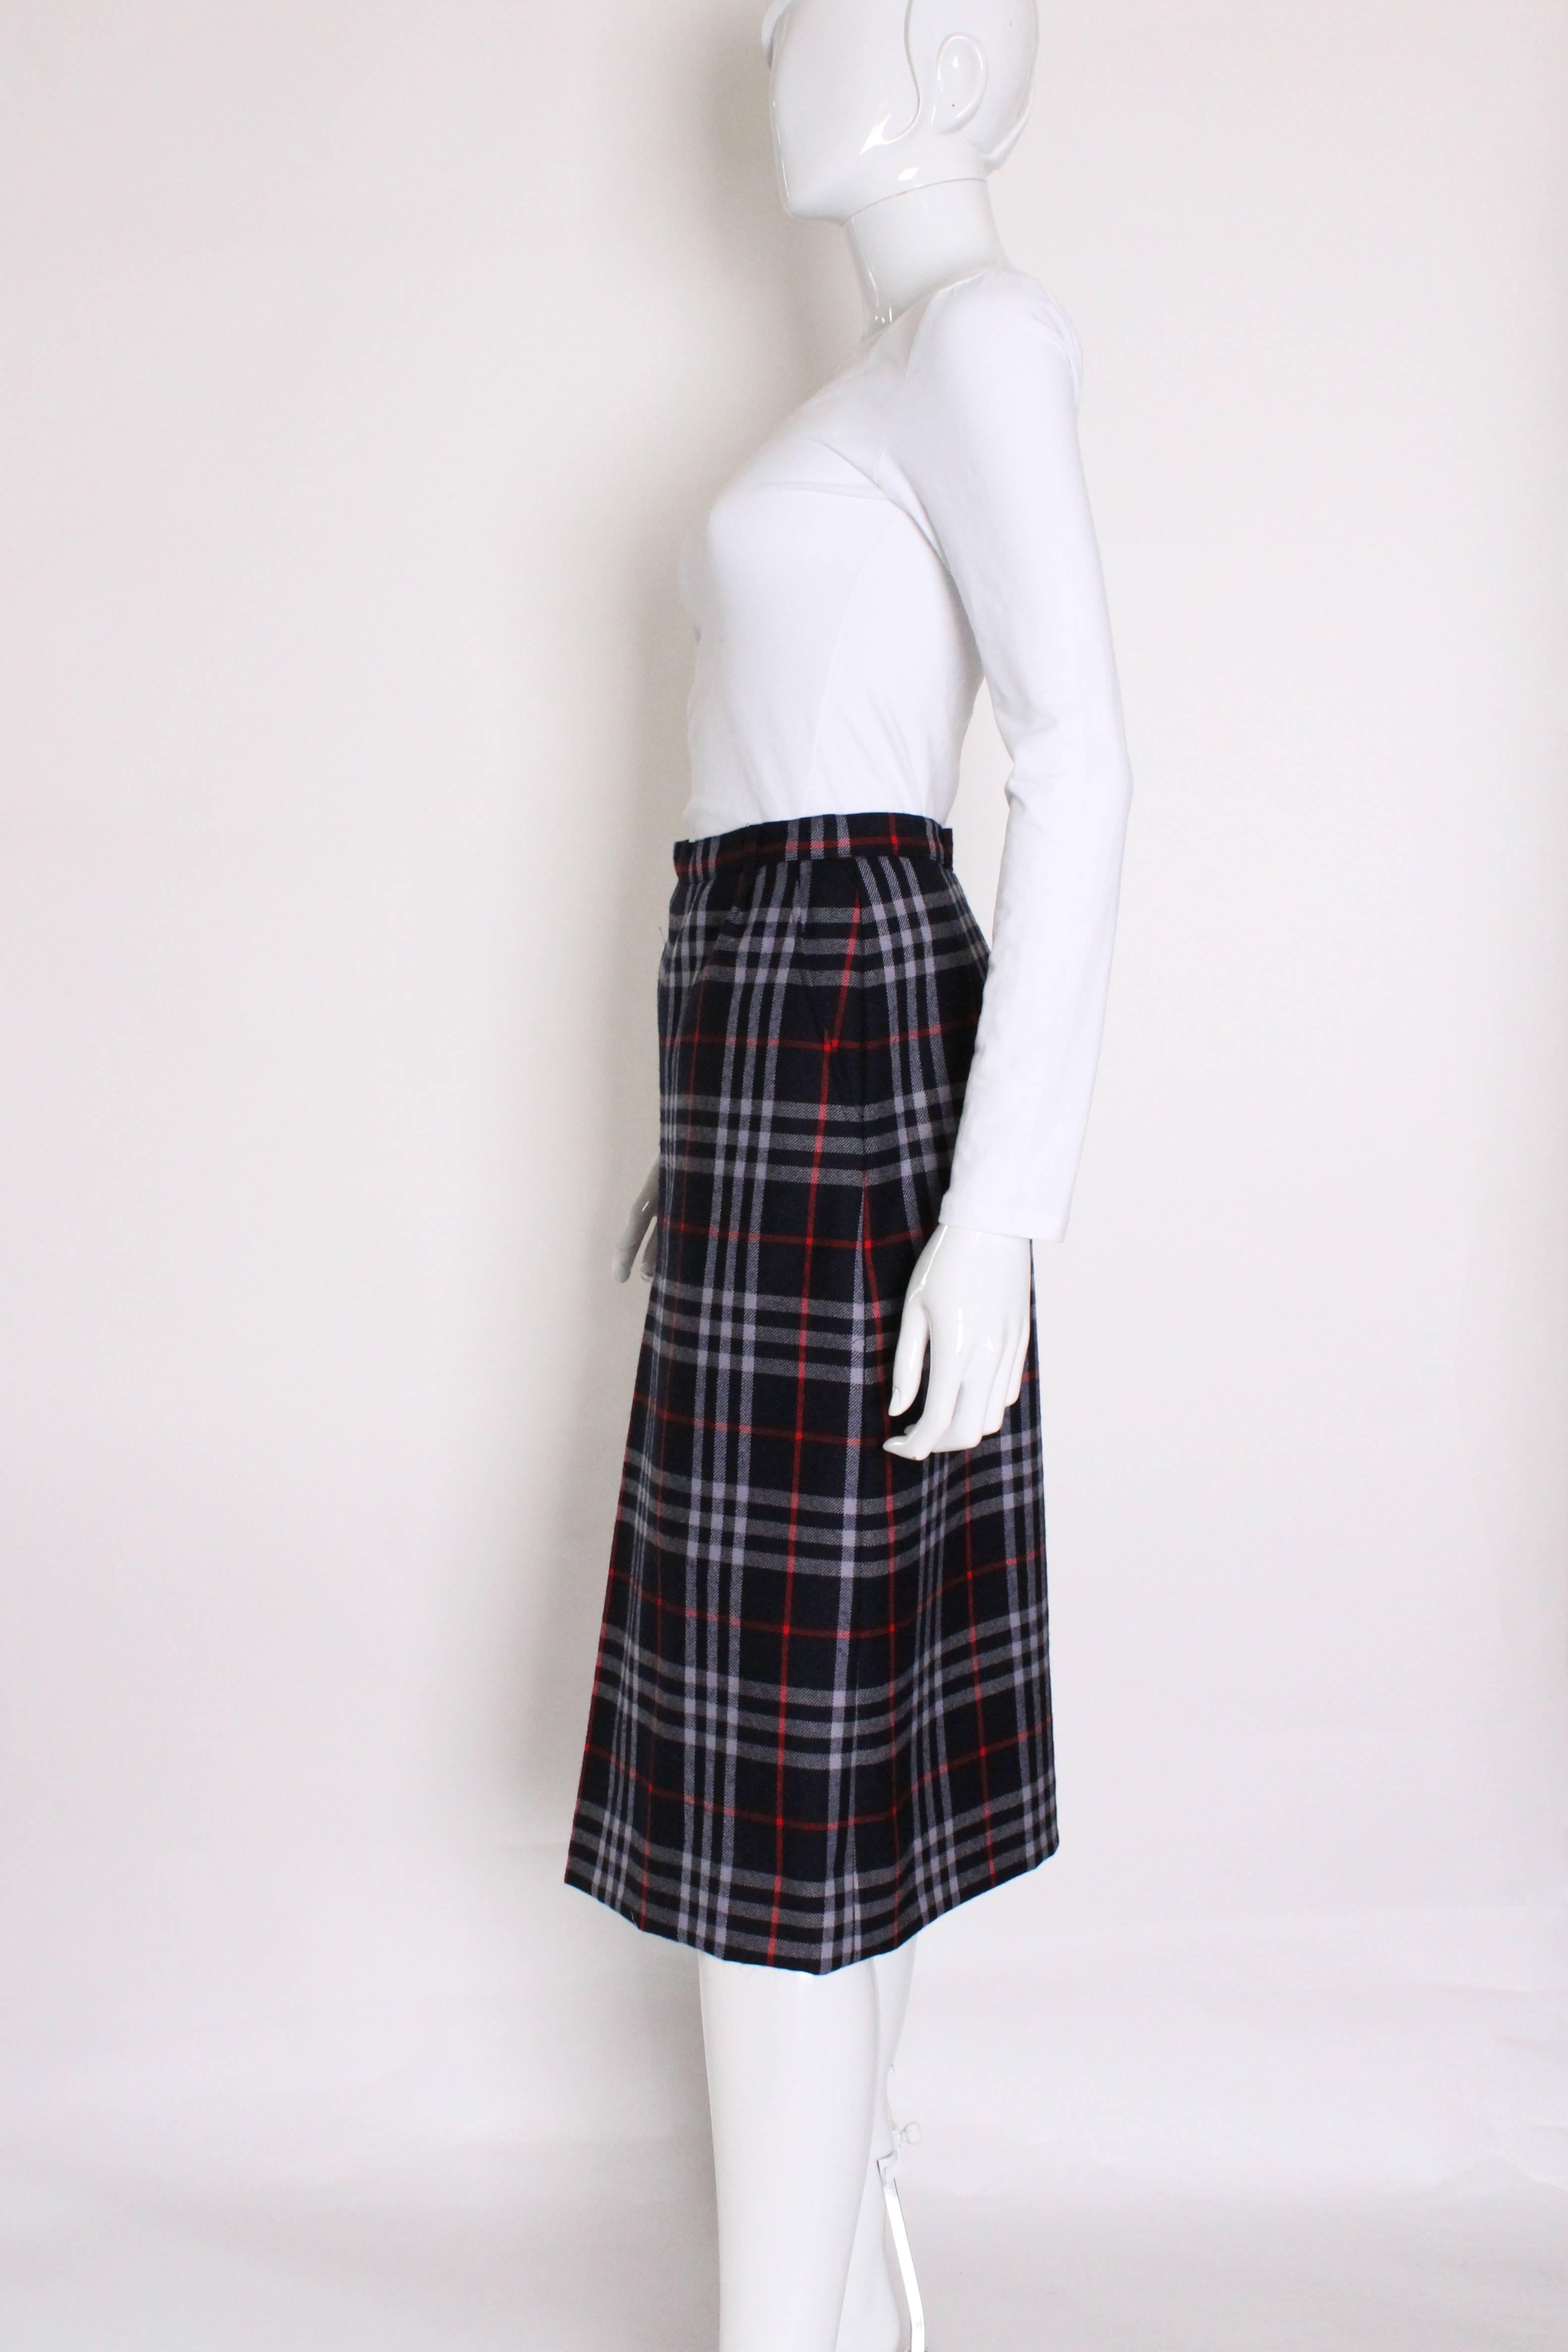 vintage burberry skirt